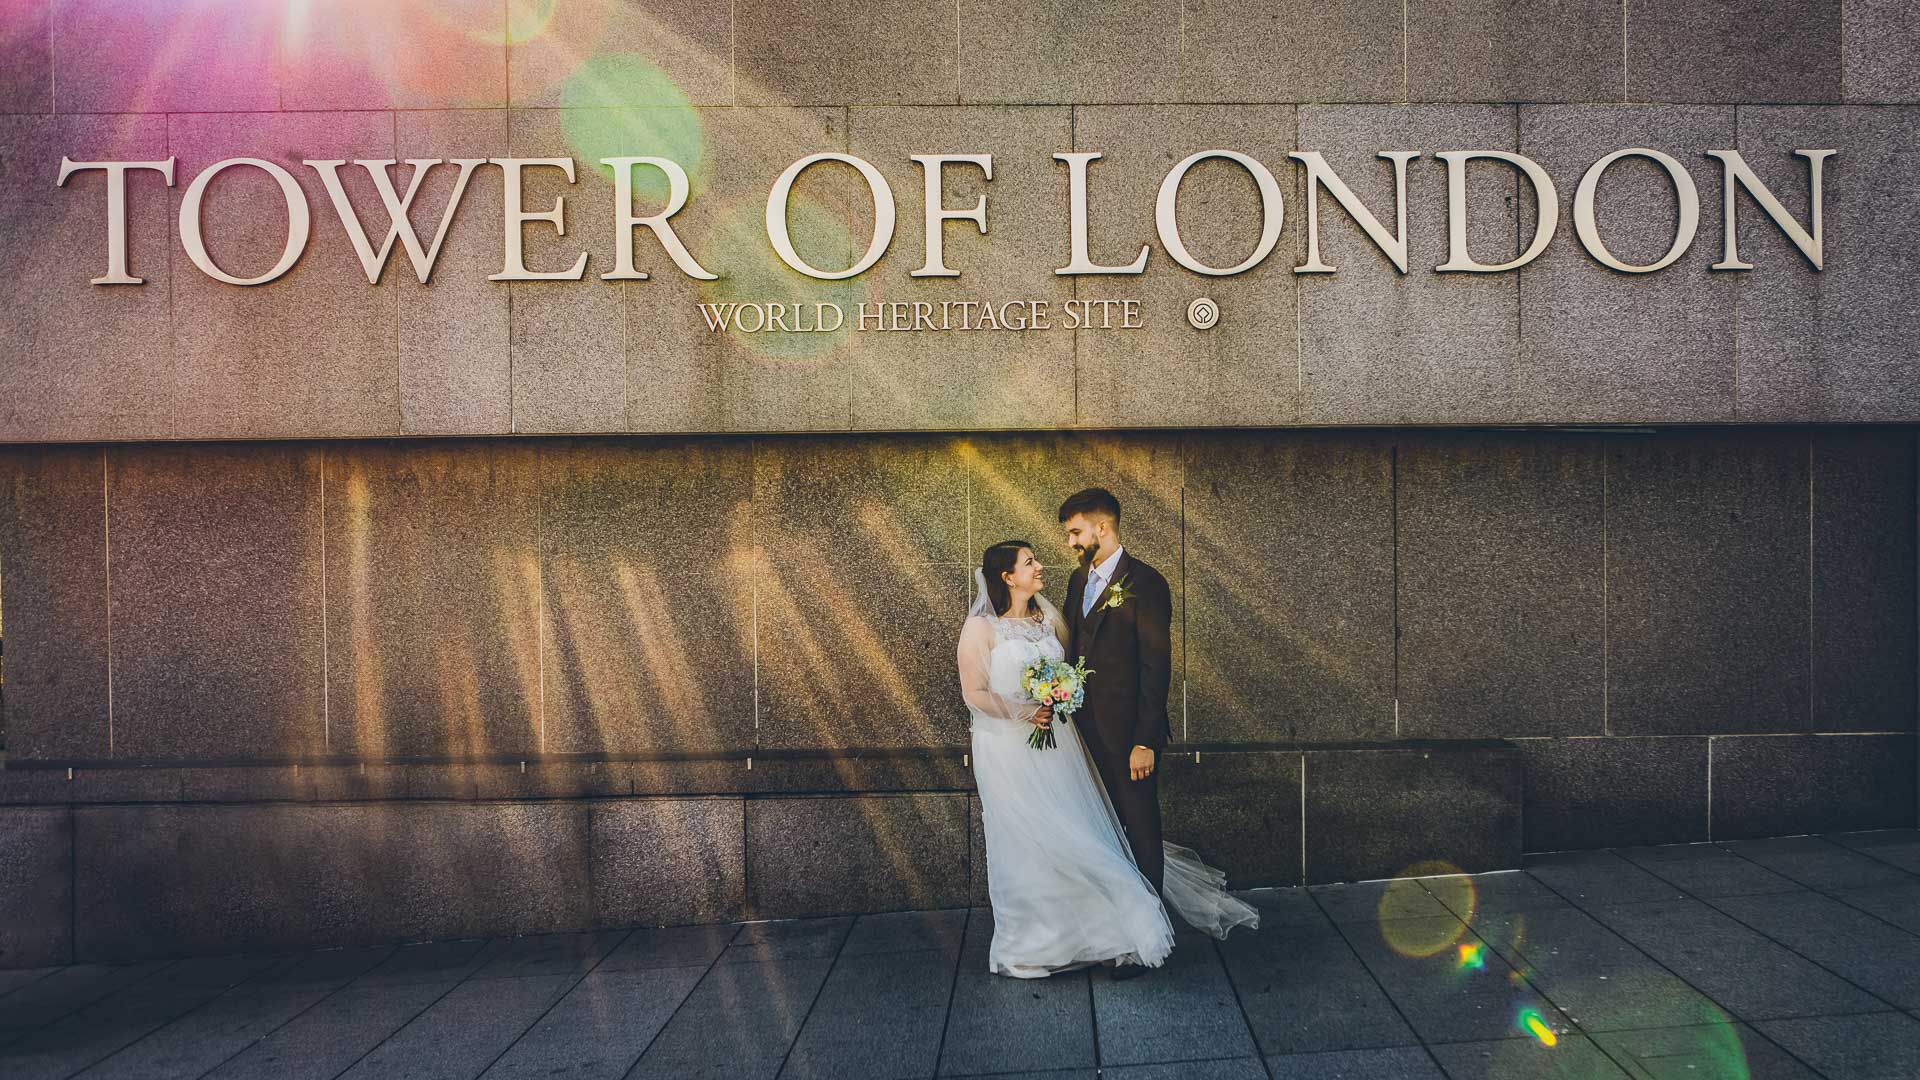 Tower of London wedding